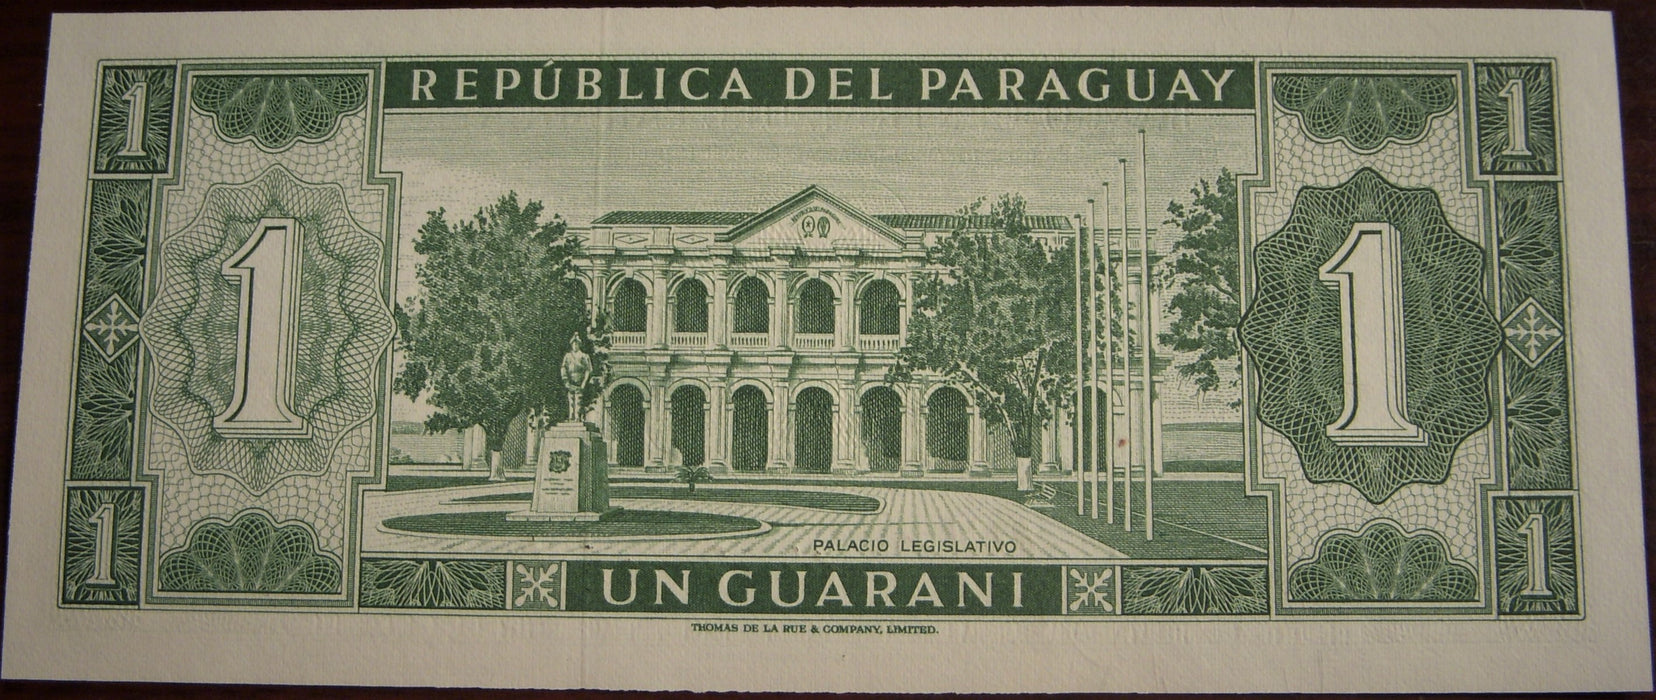 1992 1 Guarani Note - Paraguay